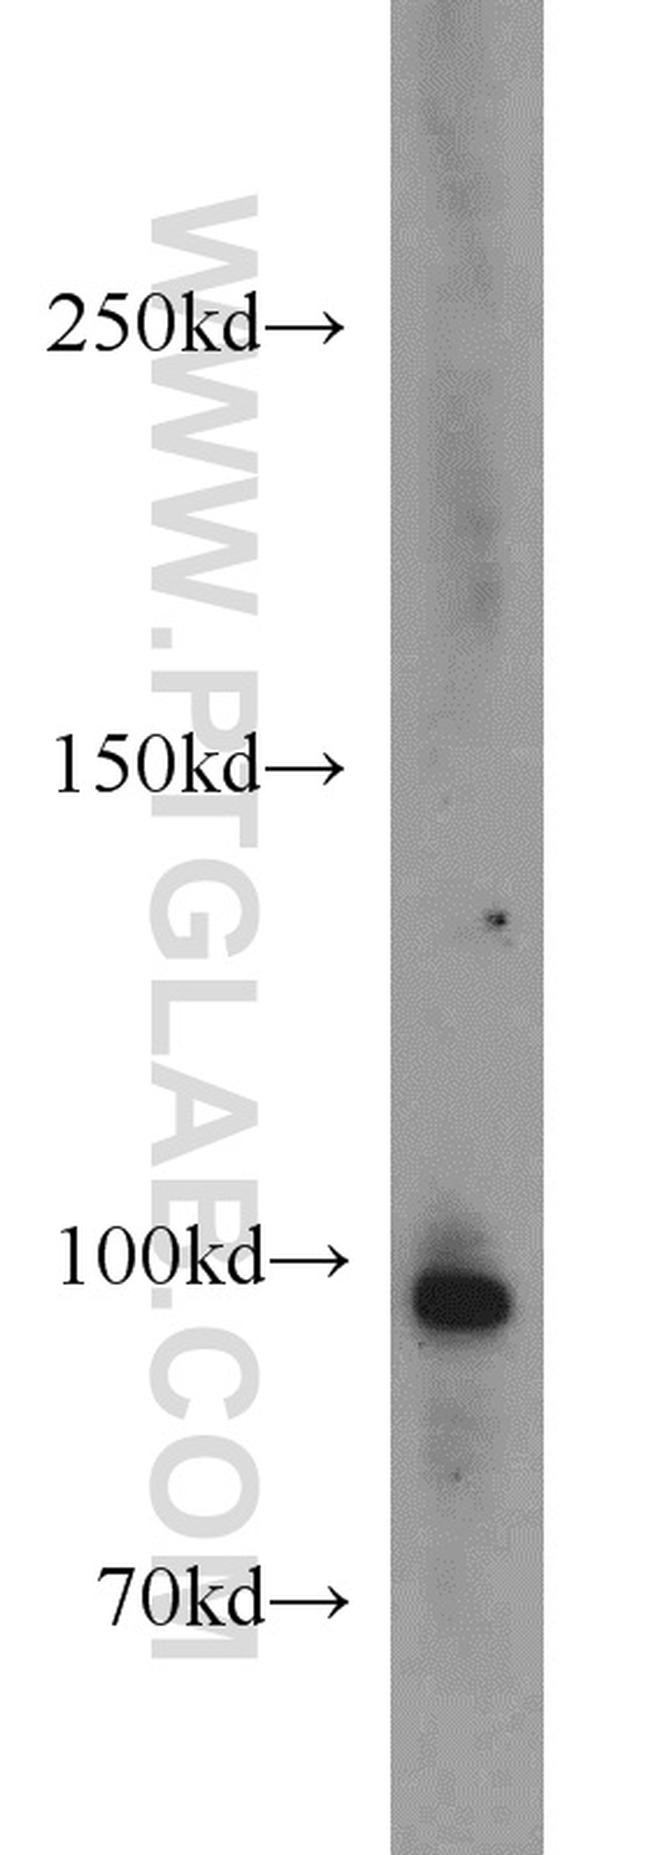 TUBGCP3 Antibody in Western Blot (WB)